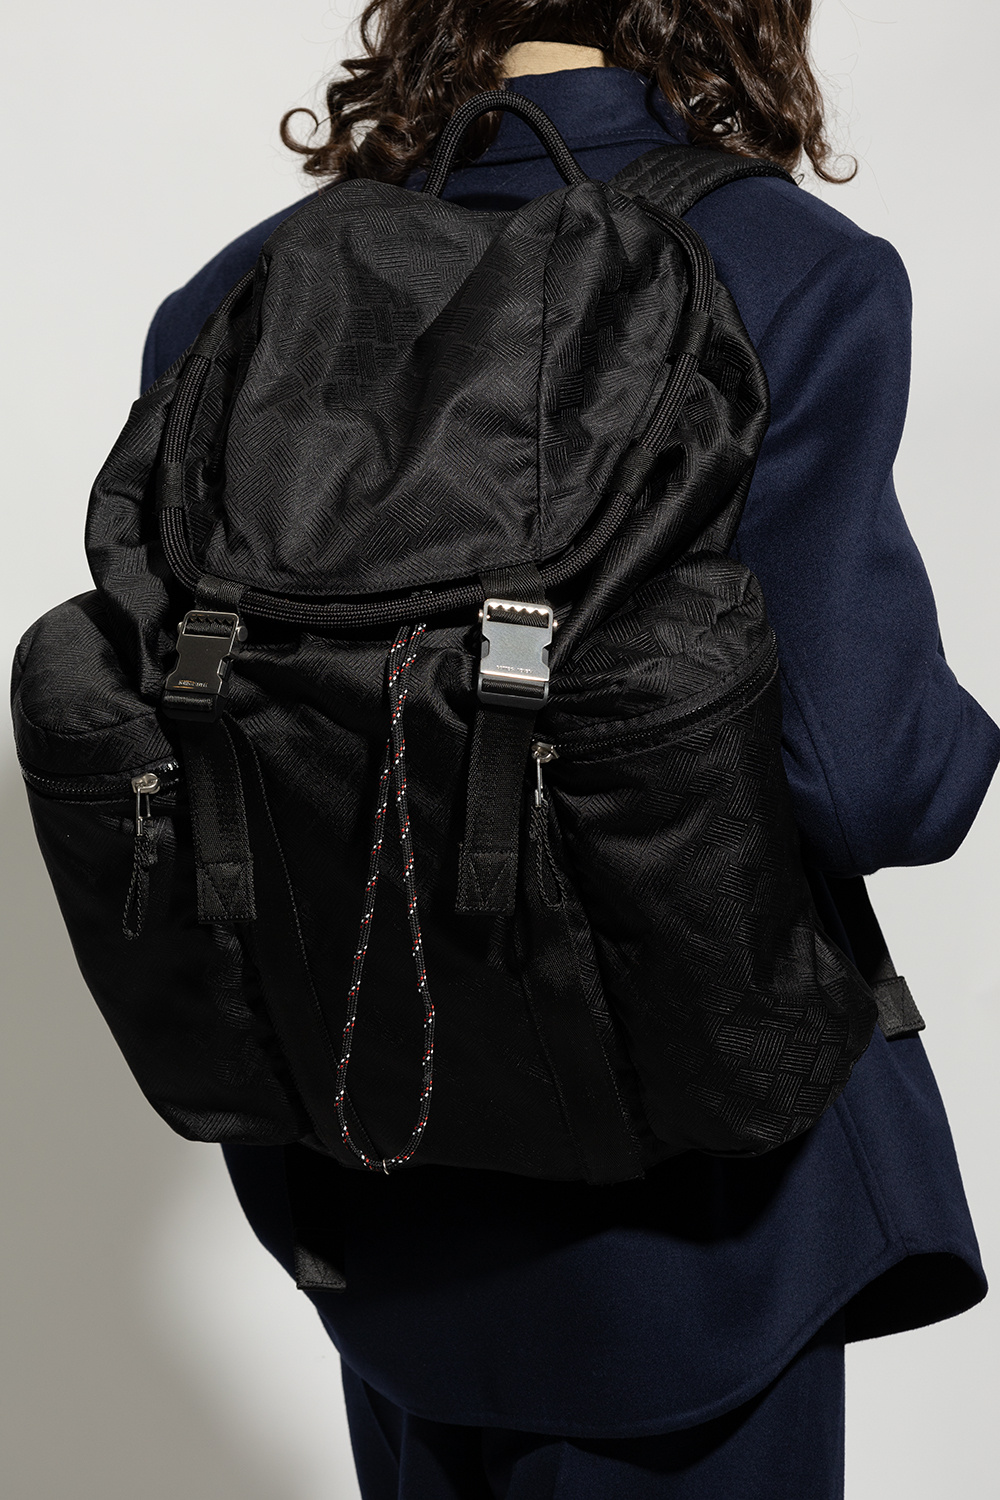 Bottega Veneta Jacquard backpack